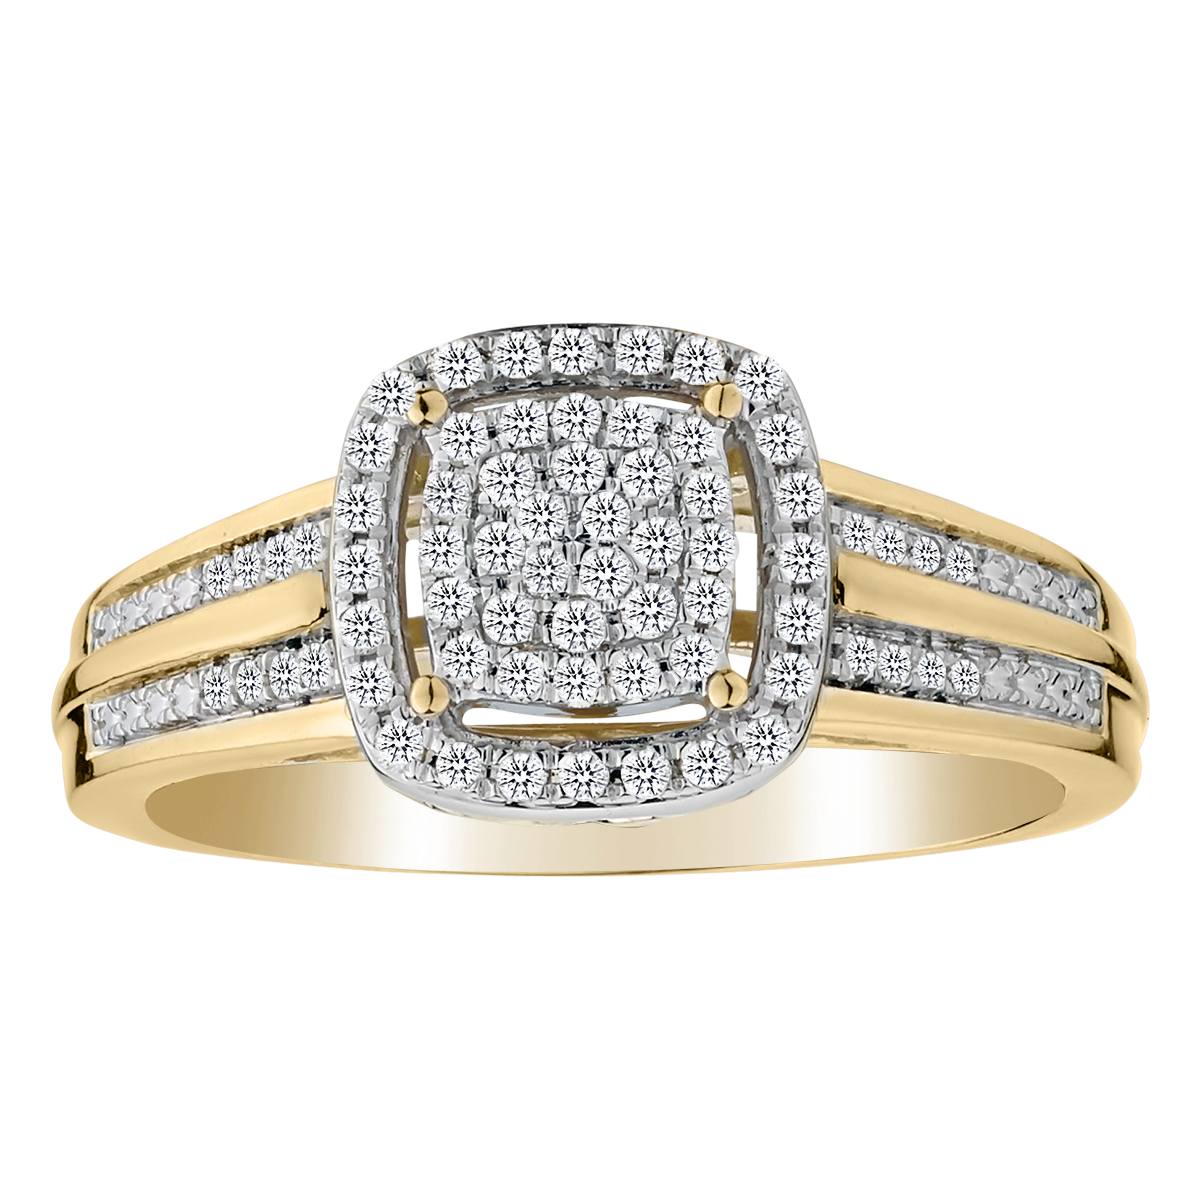 .25 Carat Diamond Ring, 10kt Yellow Gold......................NOW